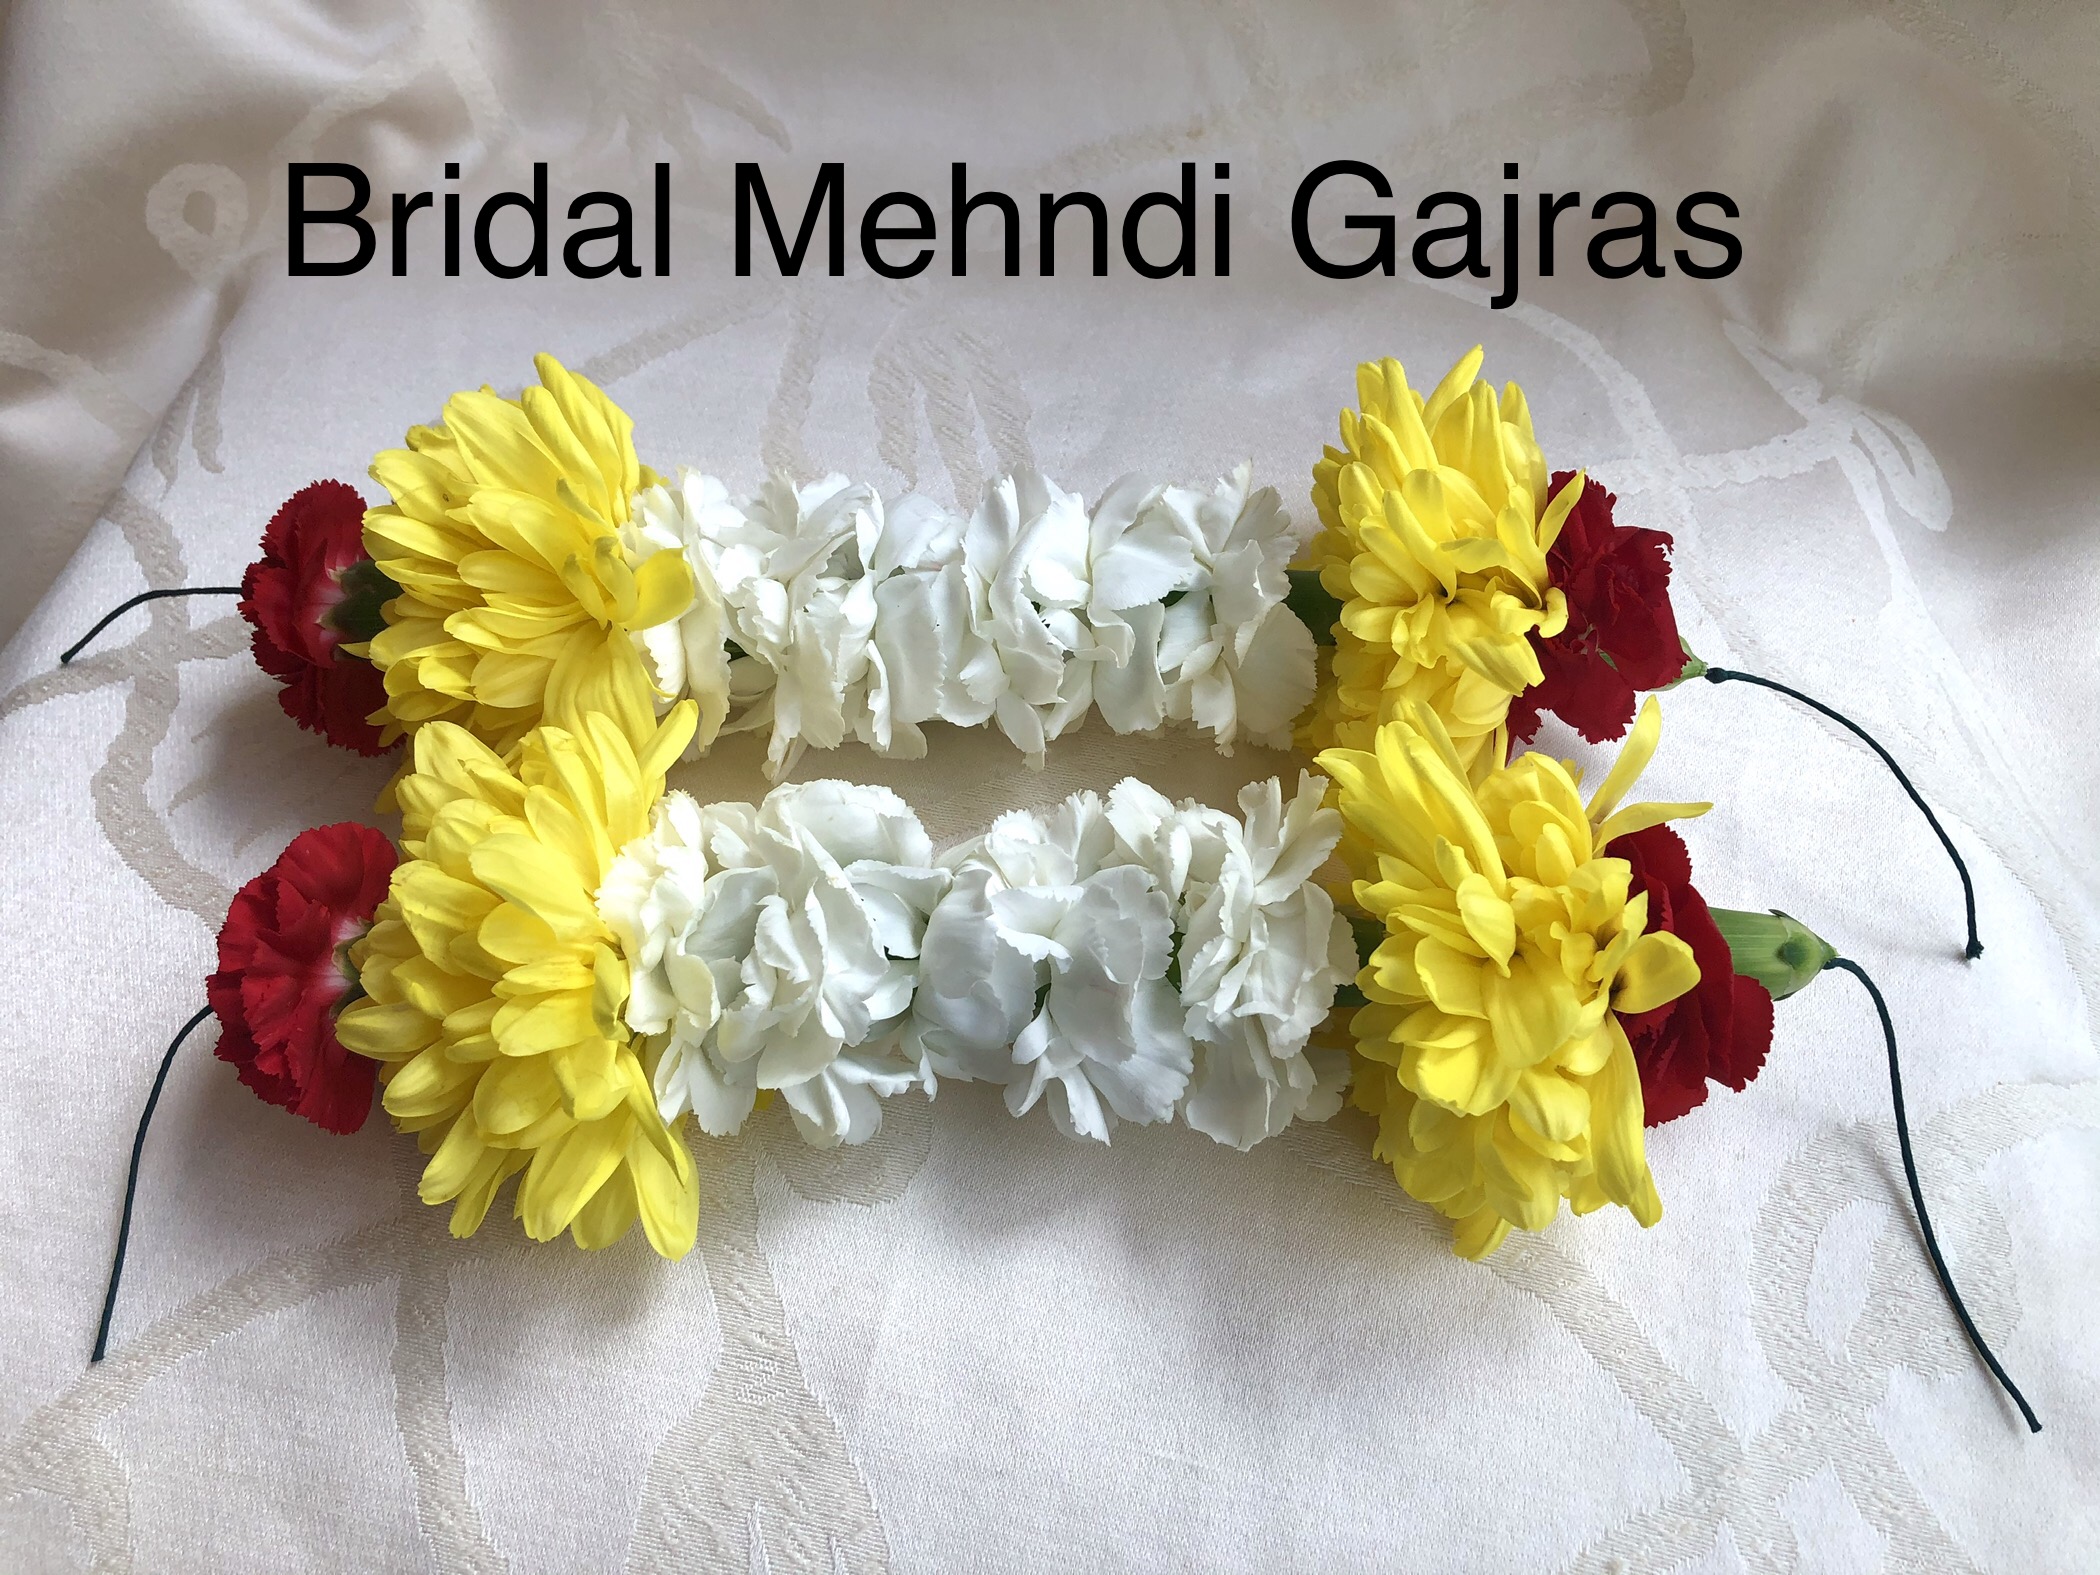 Bridal Mehndi Gajras $12 each                                                                        